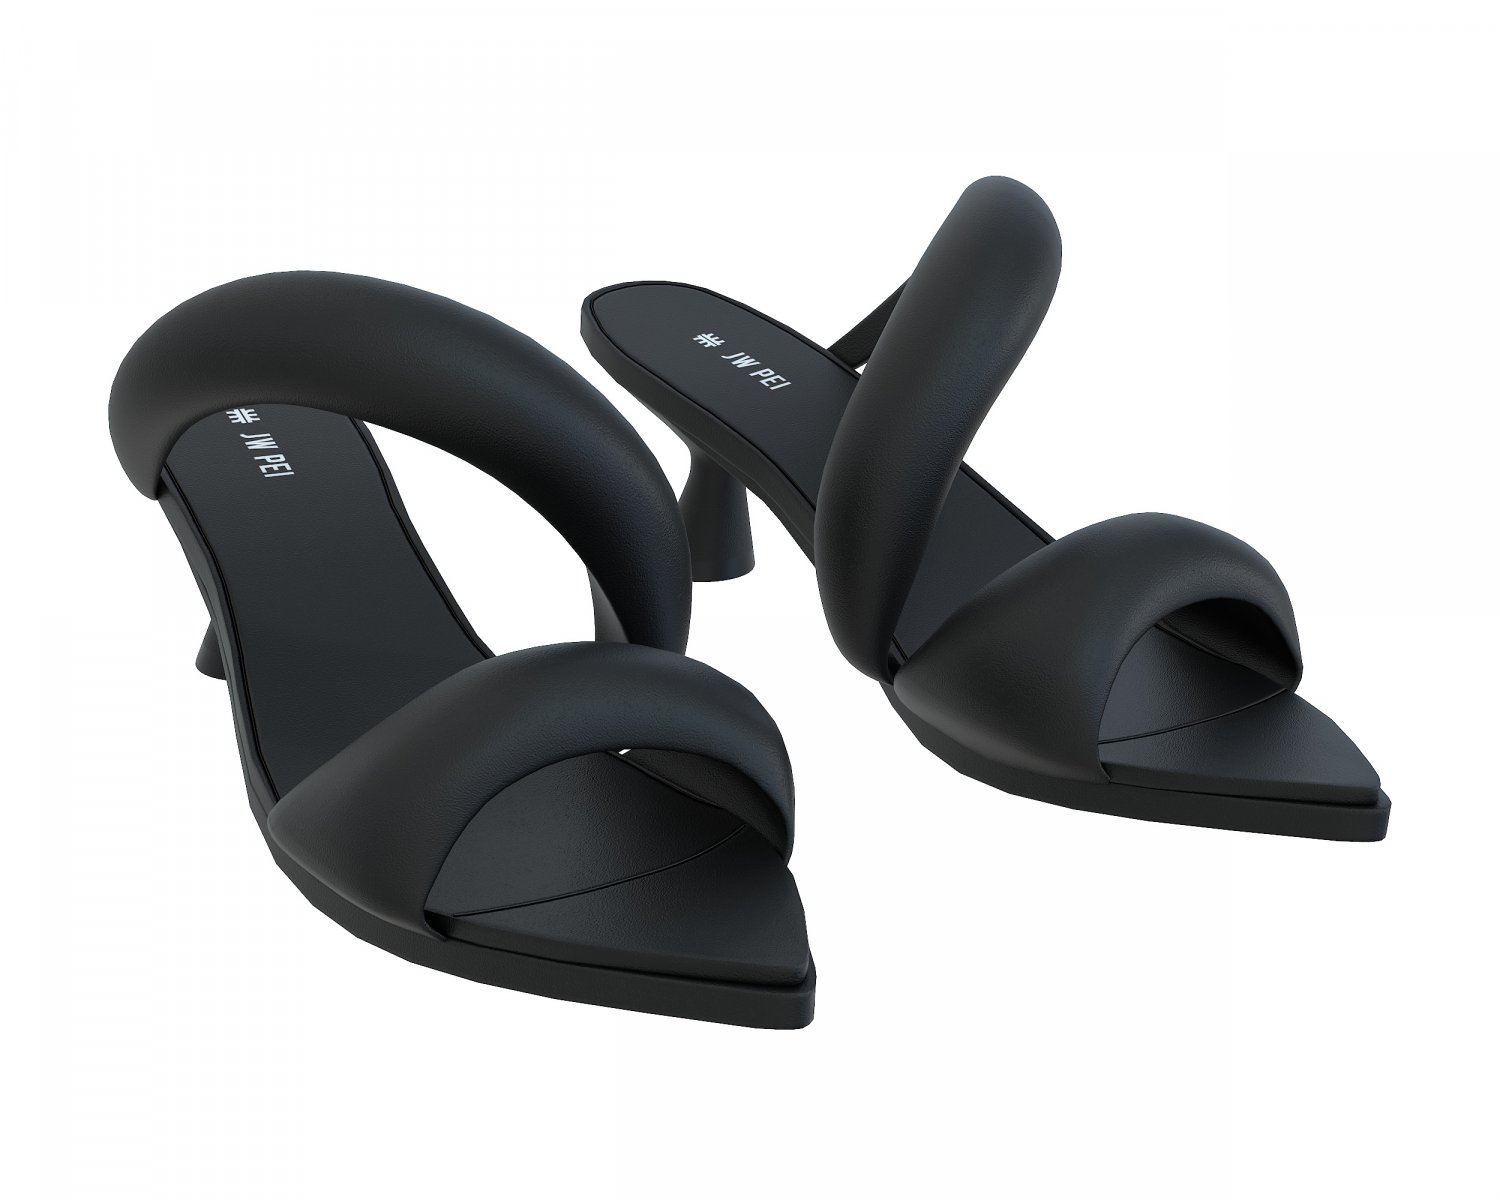  JW PEI Women's Sara Mule Heeled Sandals,Black,Size 5